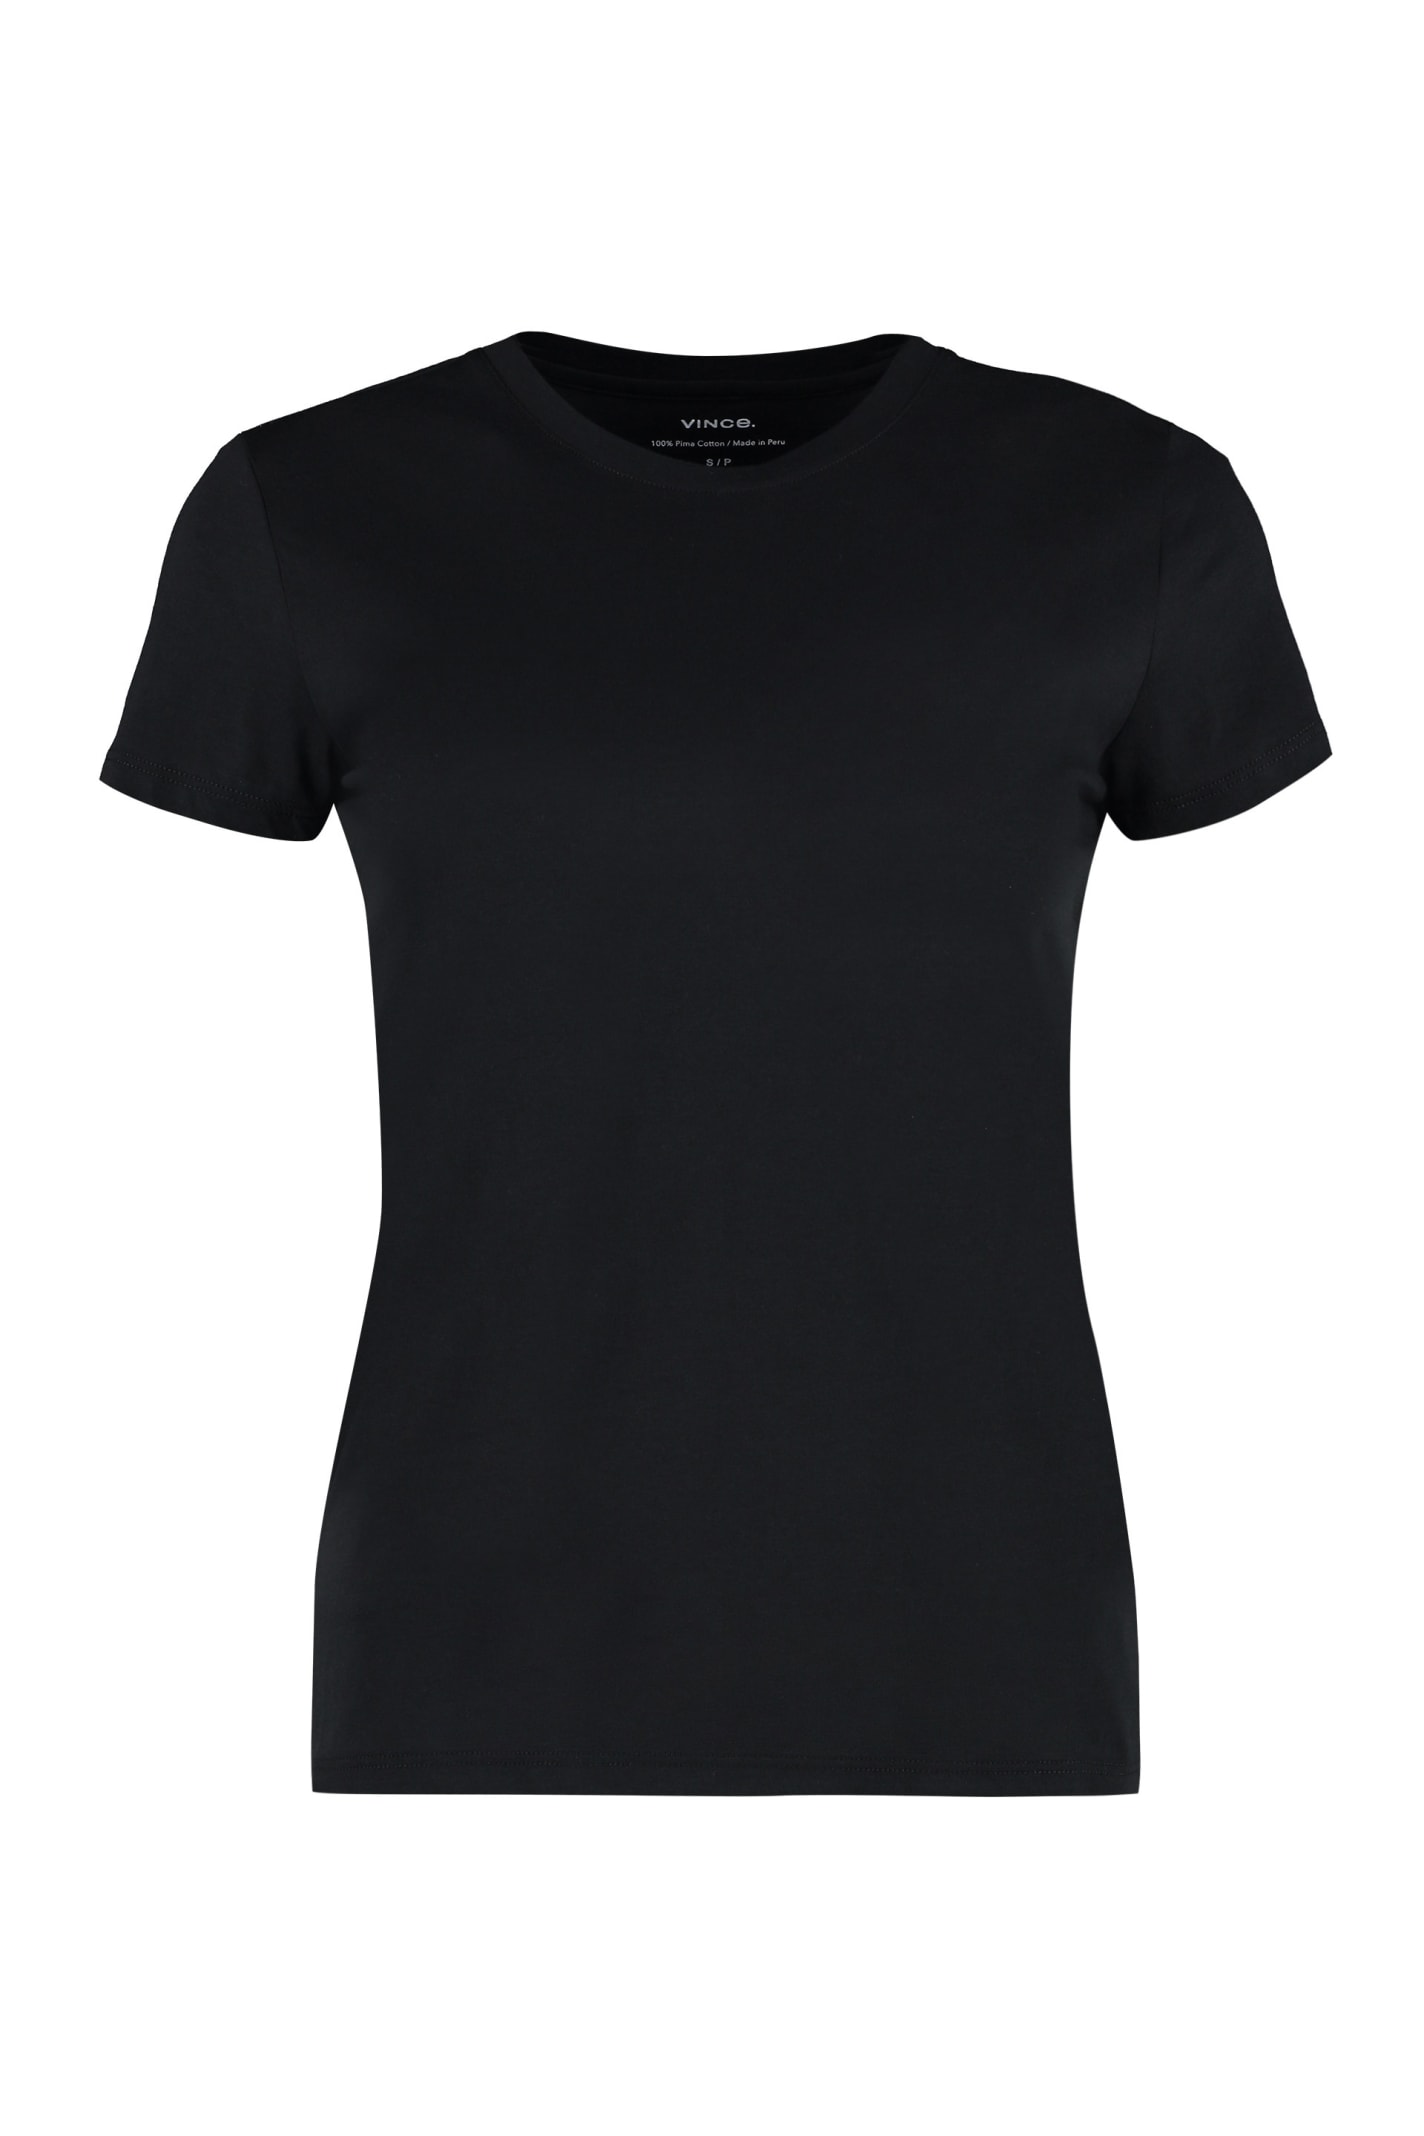 Vince Cotton Crew-neck T-shirt In Black